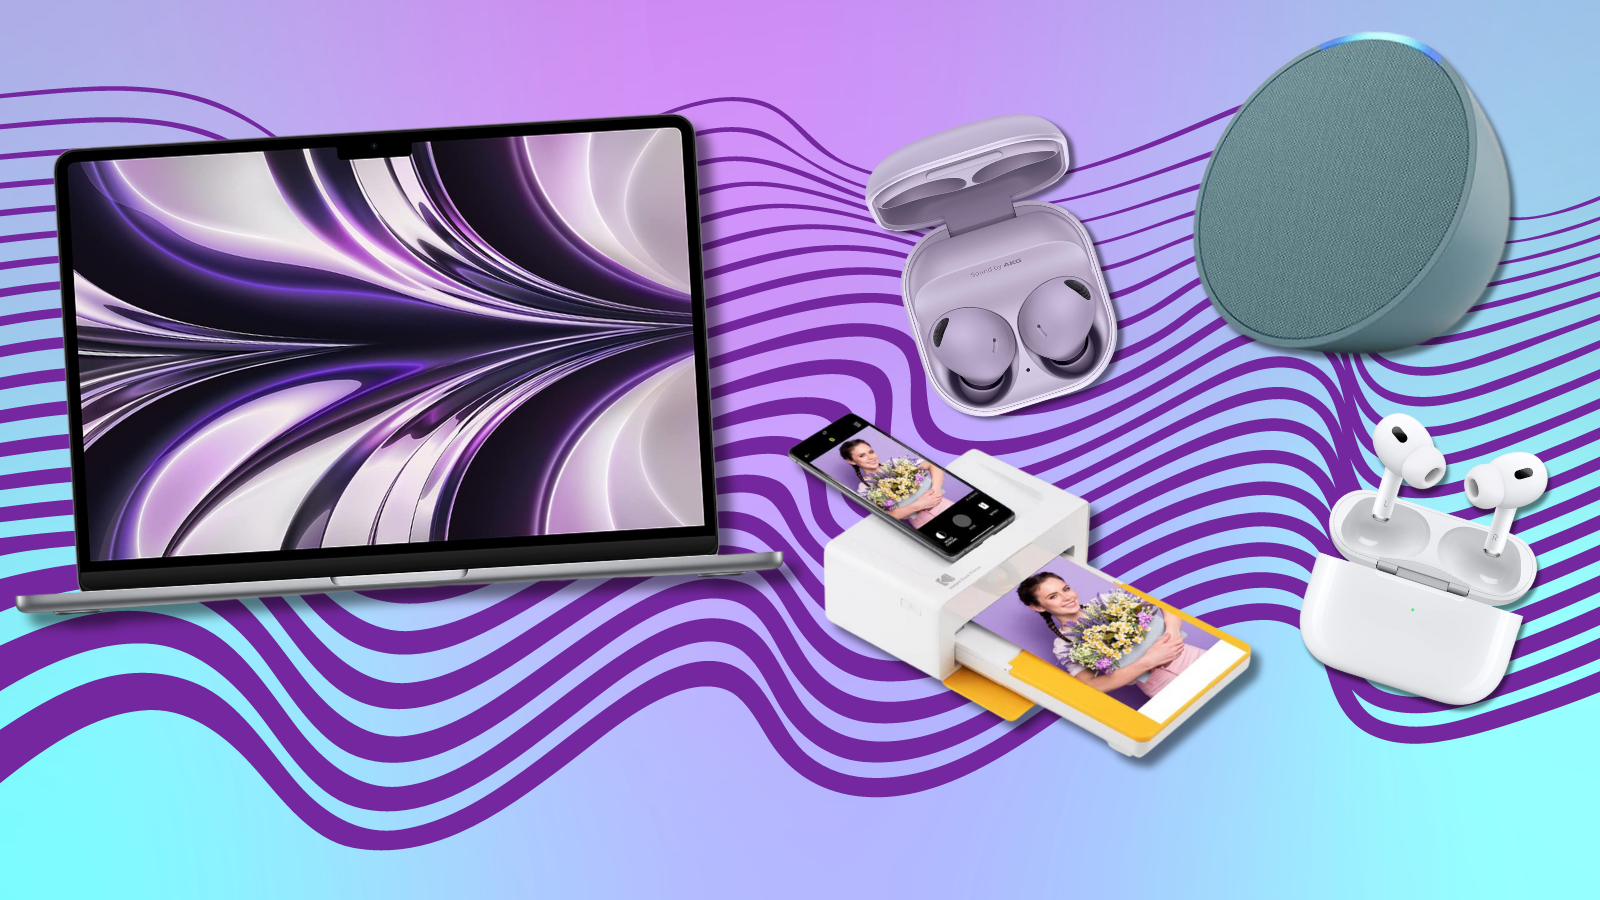 MacBook Air, Samsung Galaxy Buds, Kodak printer, Echo Pop speaker, and AirPods Pro with blue and purple background